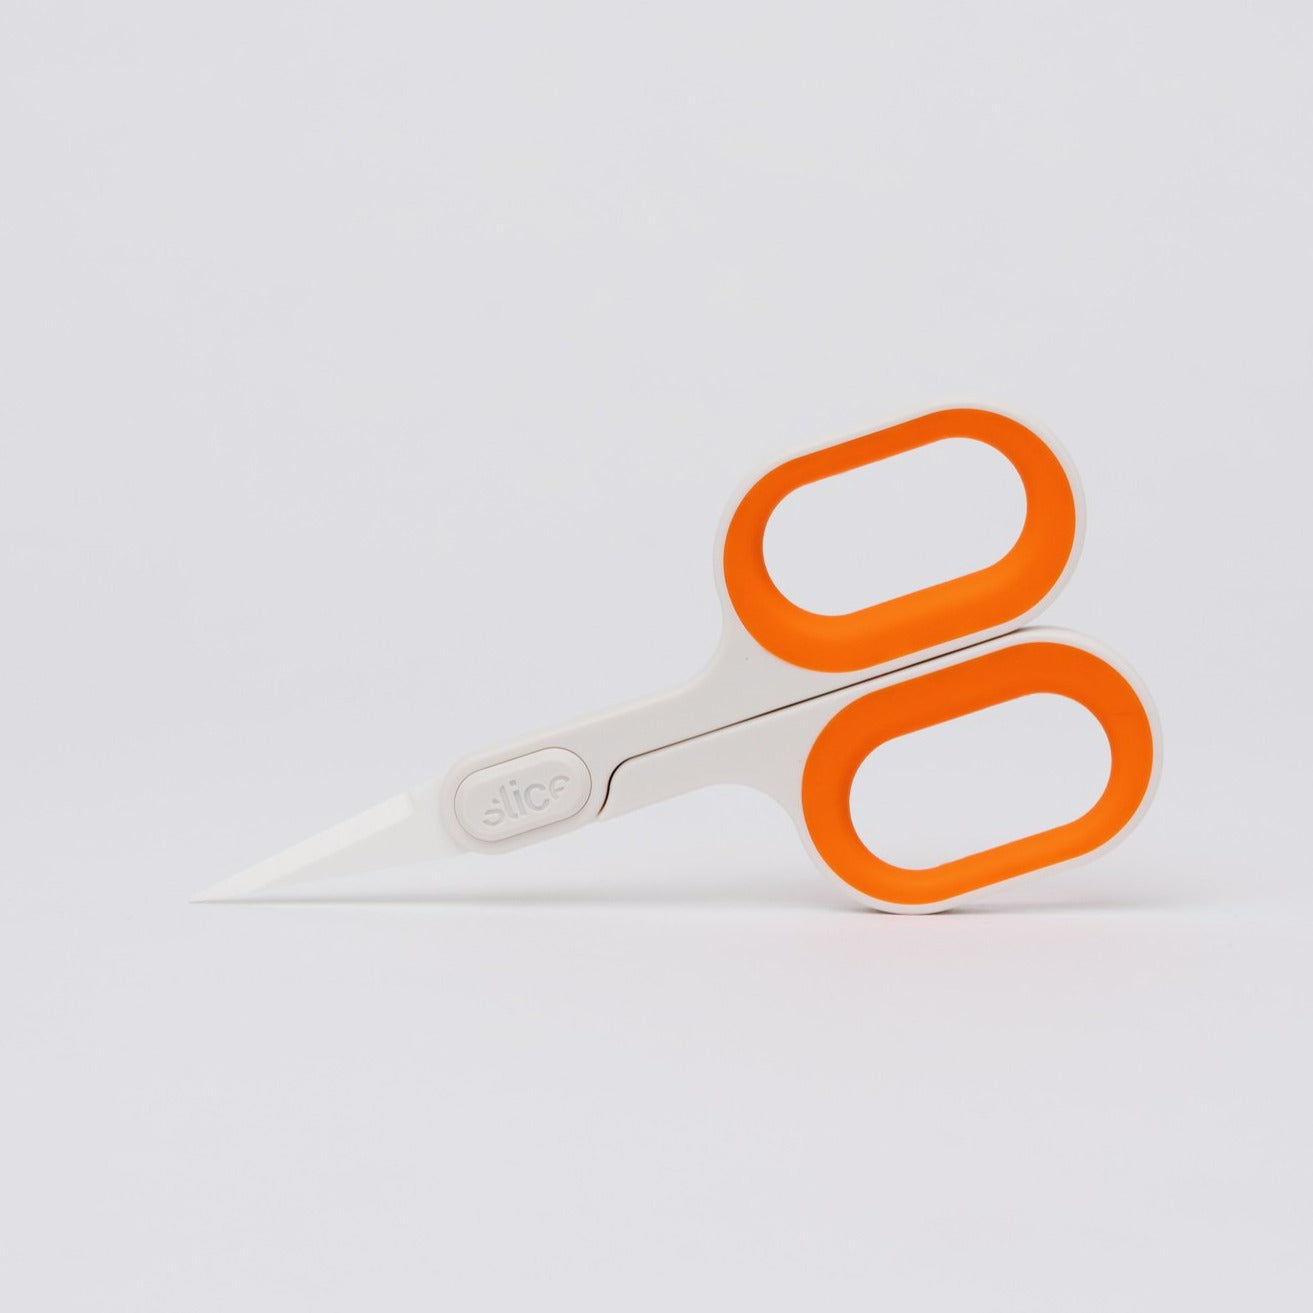 Precision Safety Scissors